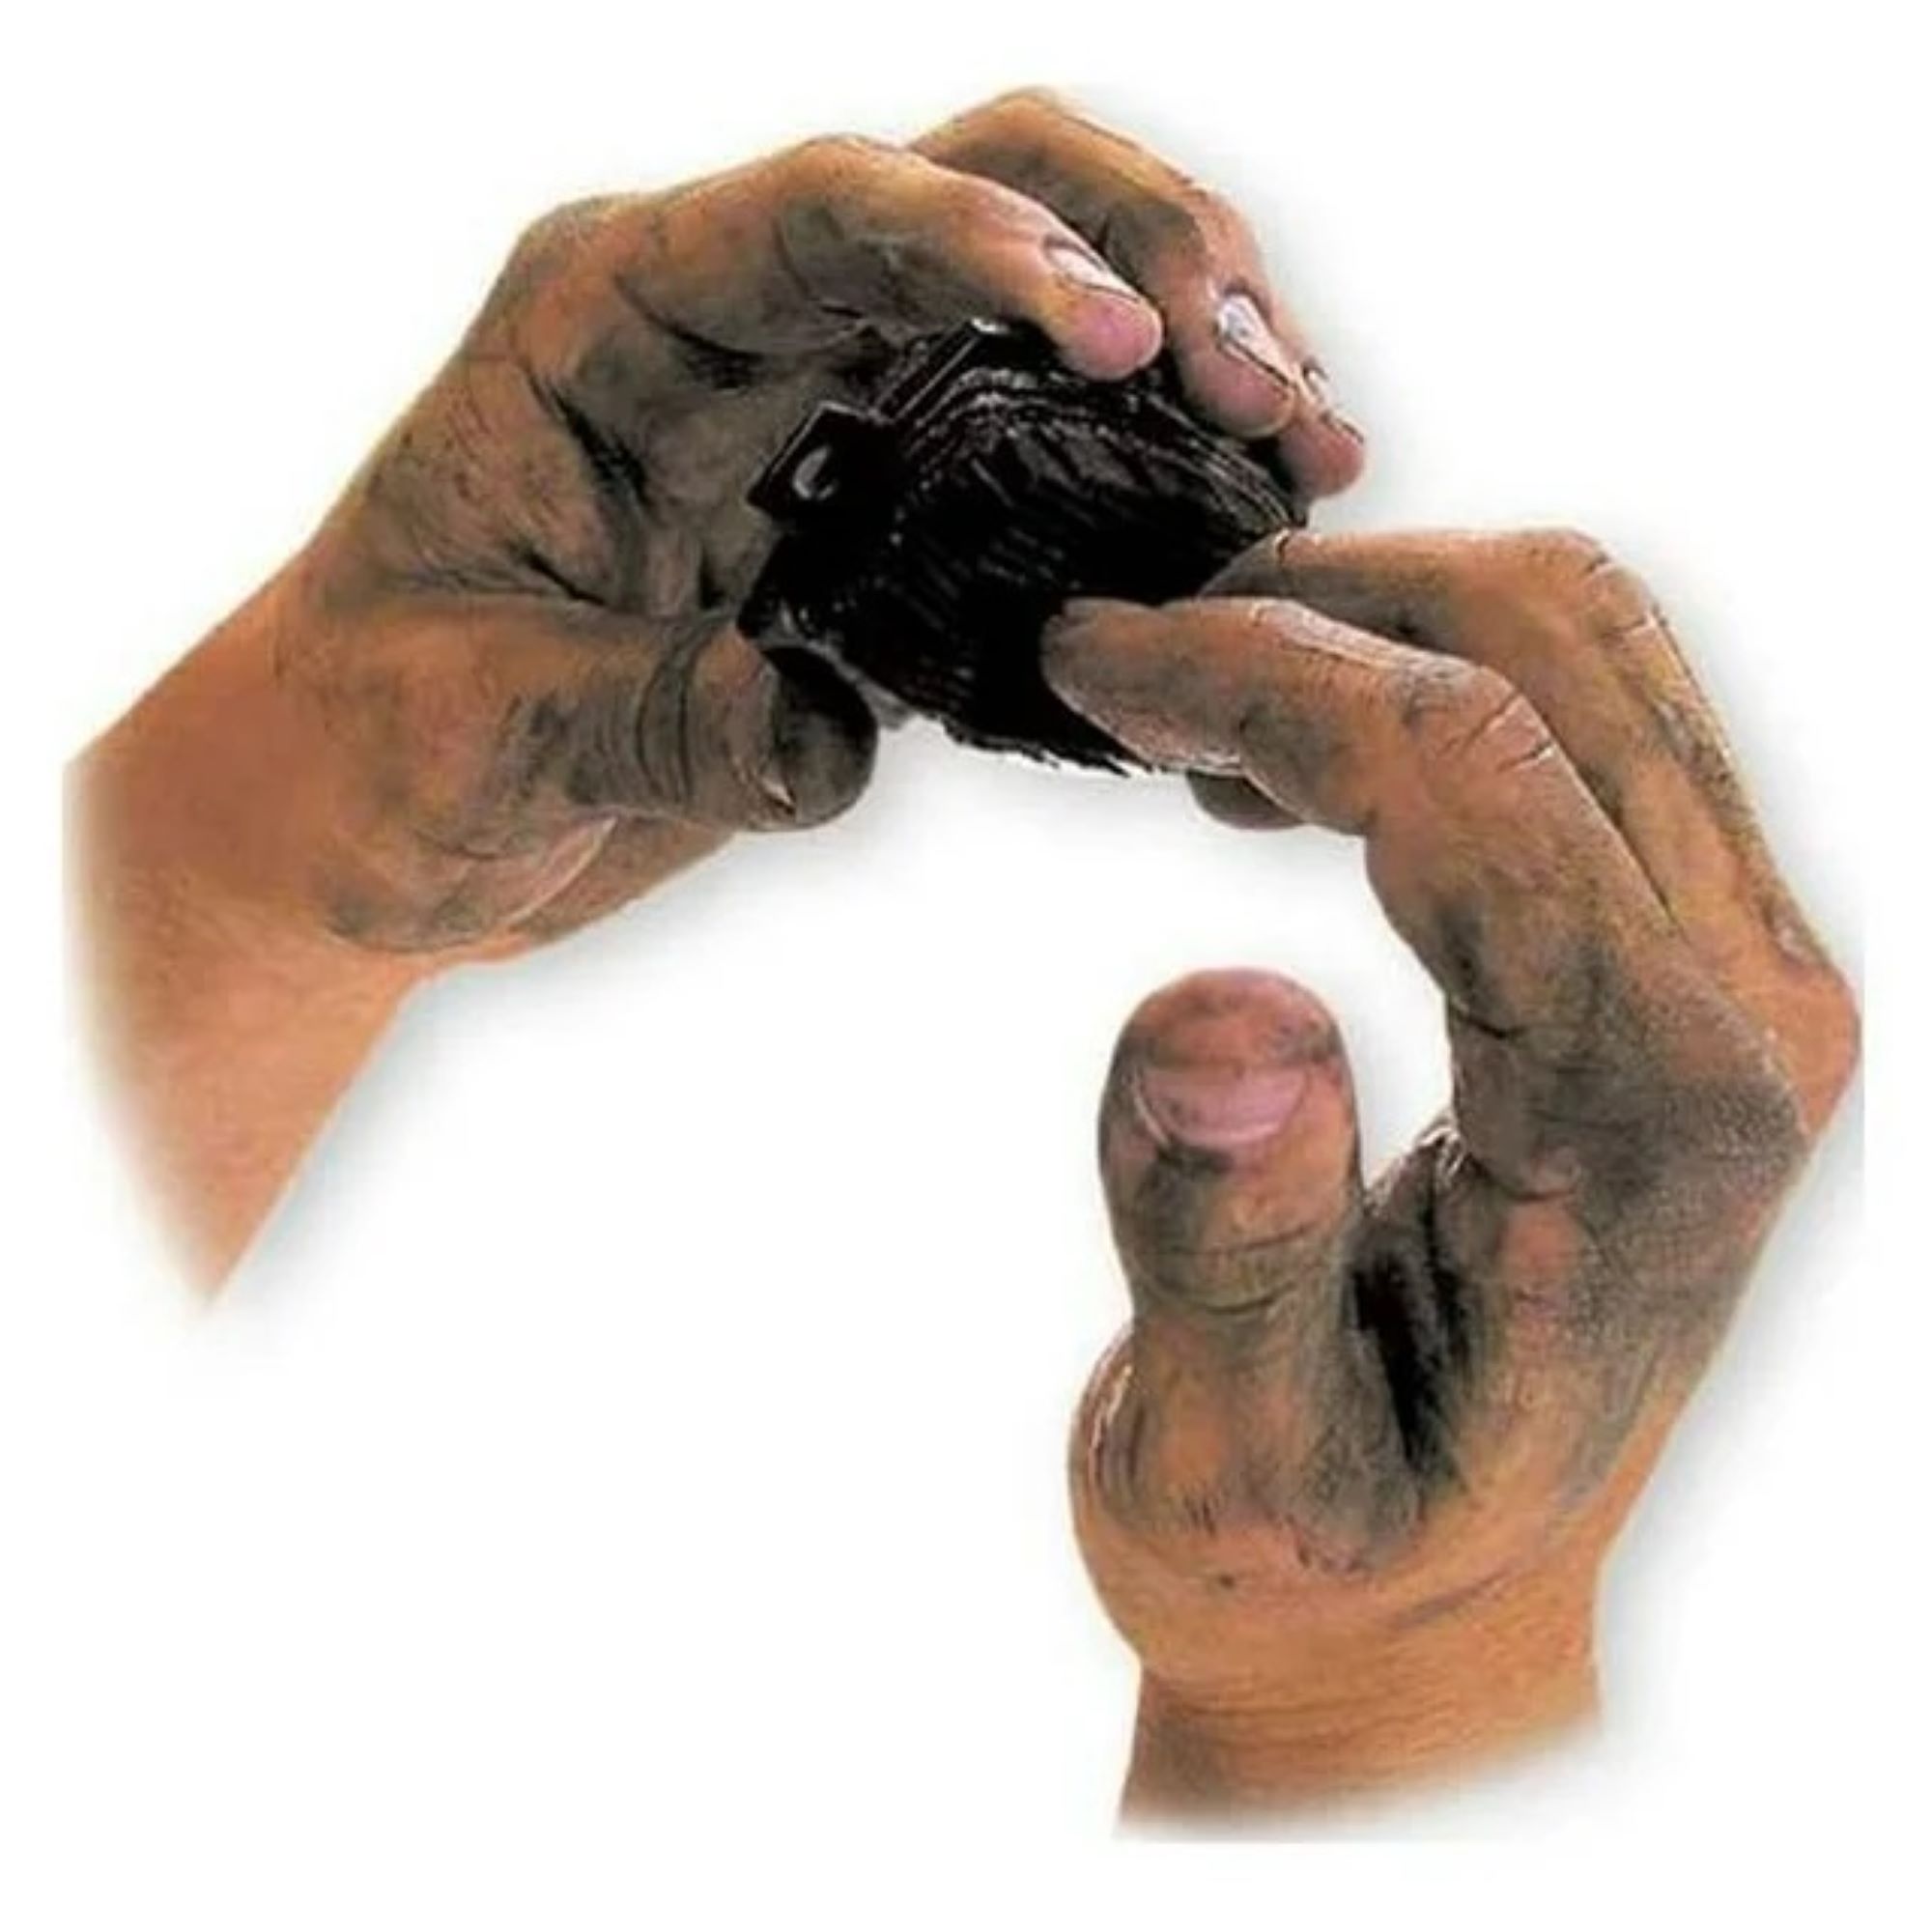 Permatex Fine Pumice Lotion Hand Cleaner 8.5-fl oz Citrus Scented